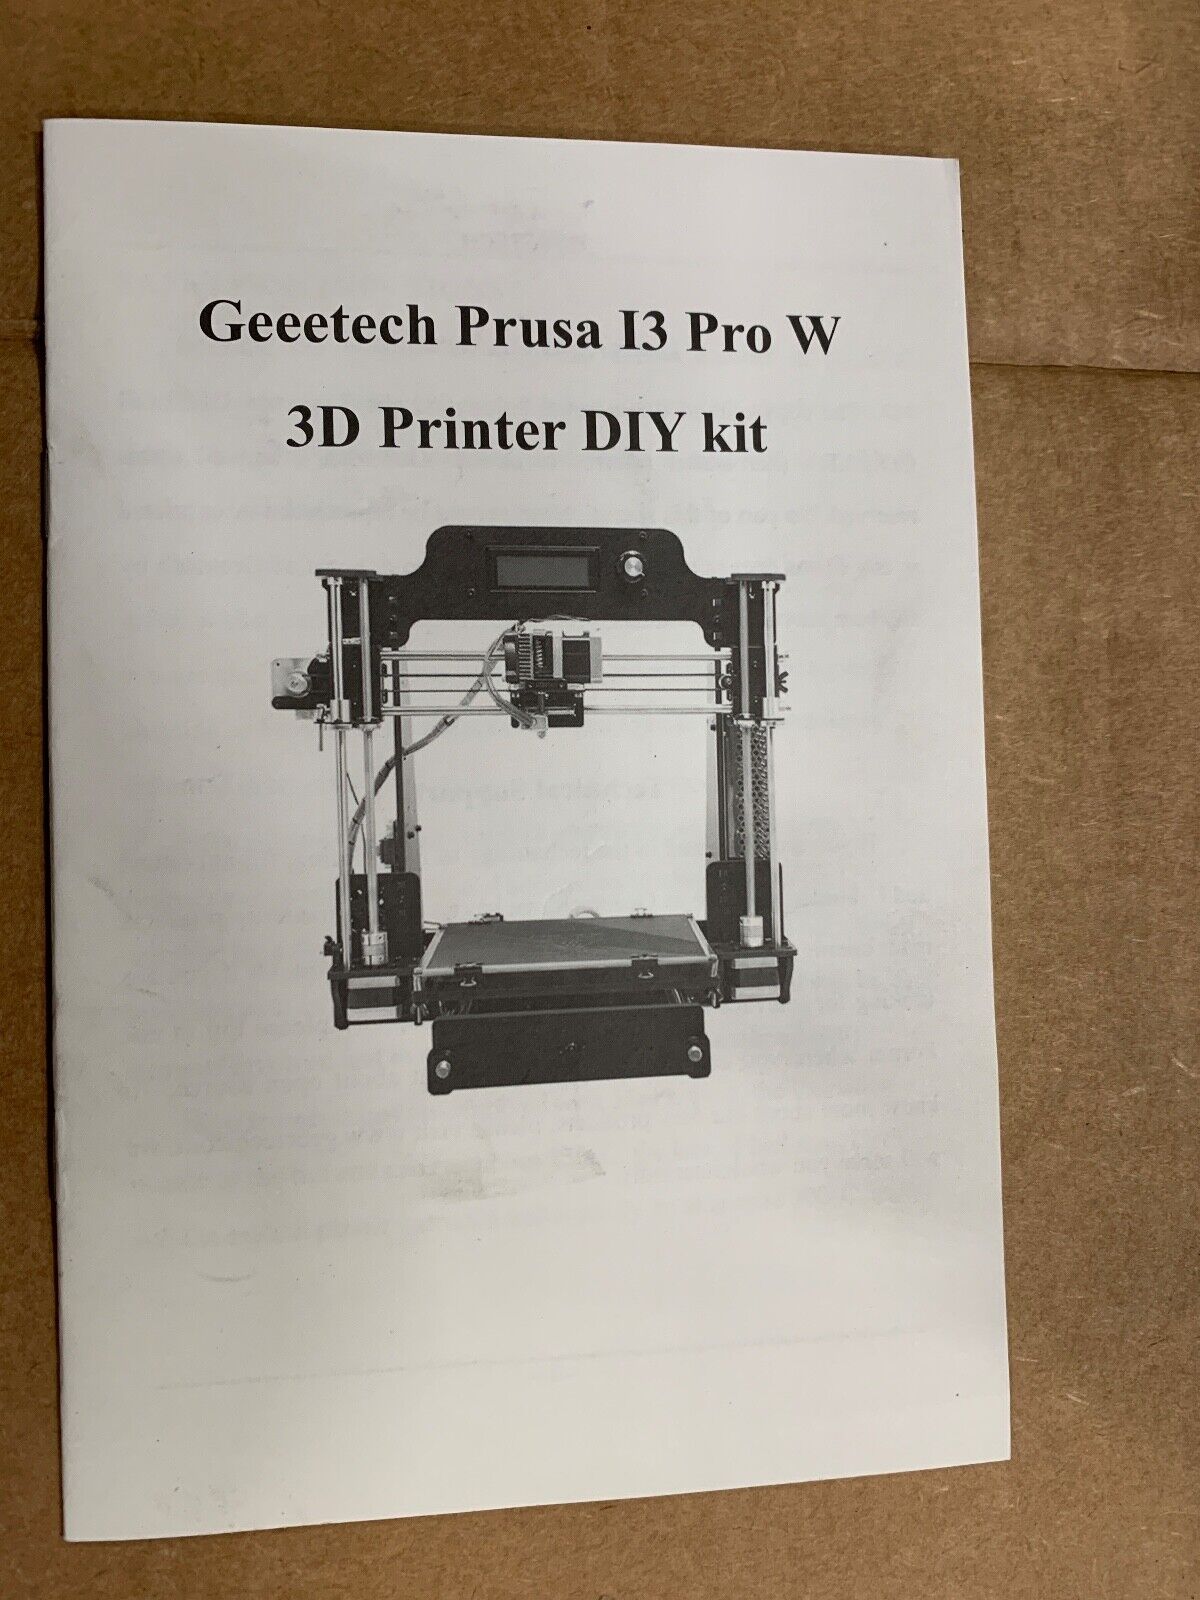 GEEETECH PRUSA I3 PRO W 3D PRINTER DIY KIT